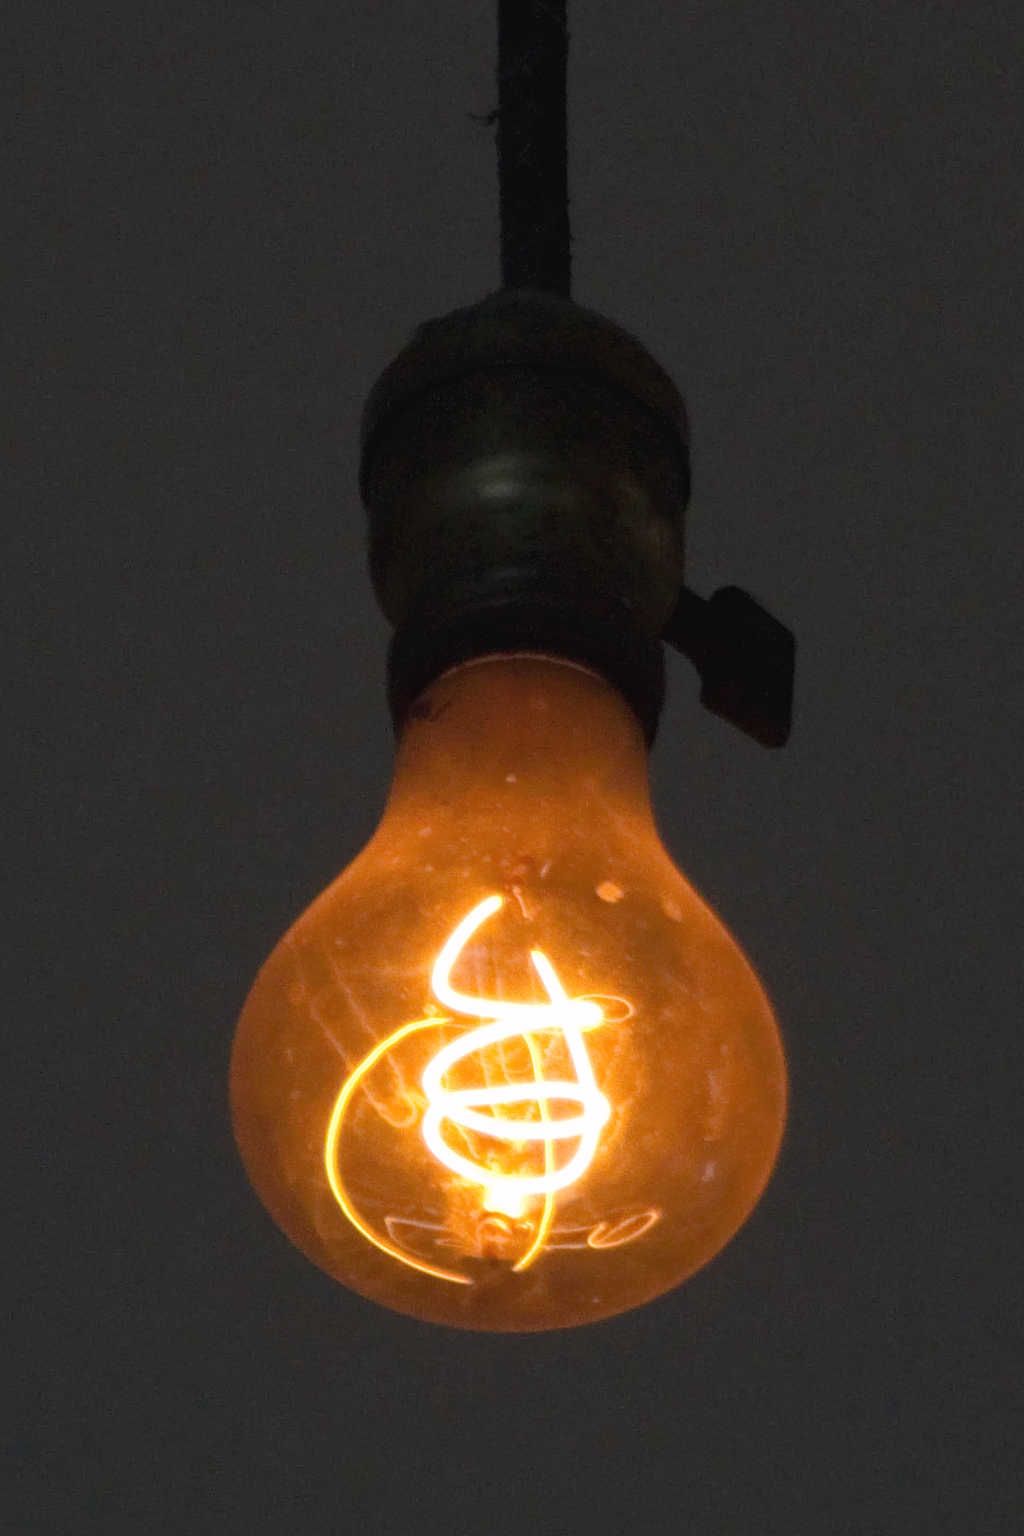 How to validate startup ideas using predictive analytics? Photo: Centennial light bulb of Livermore, CA/Wikimedia/Nurs/Public Domain